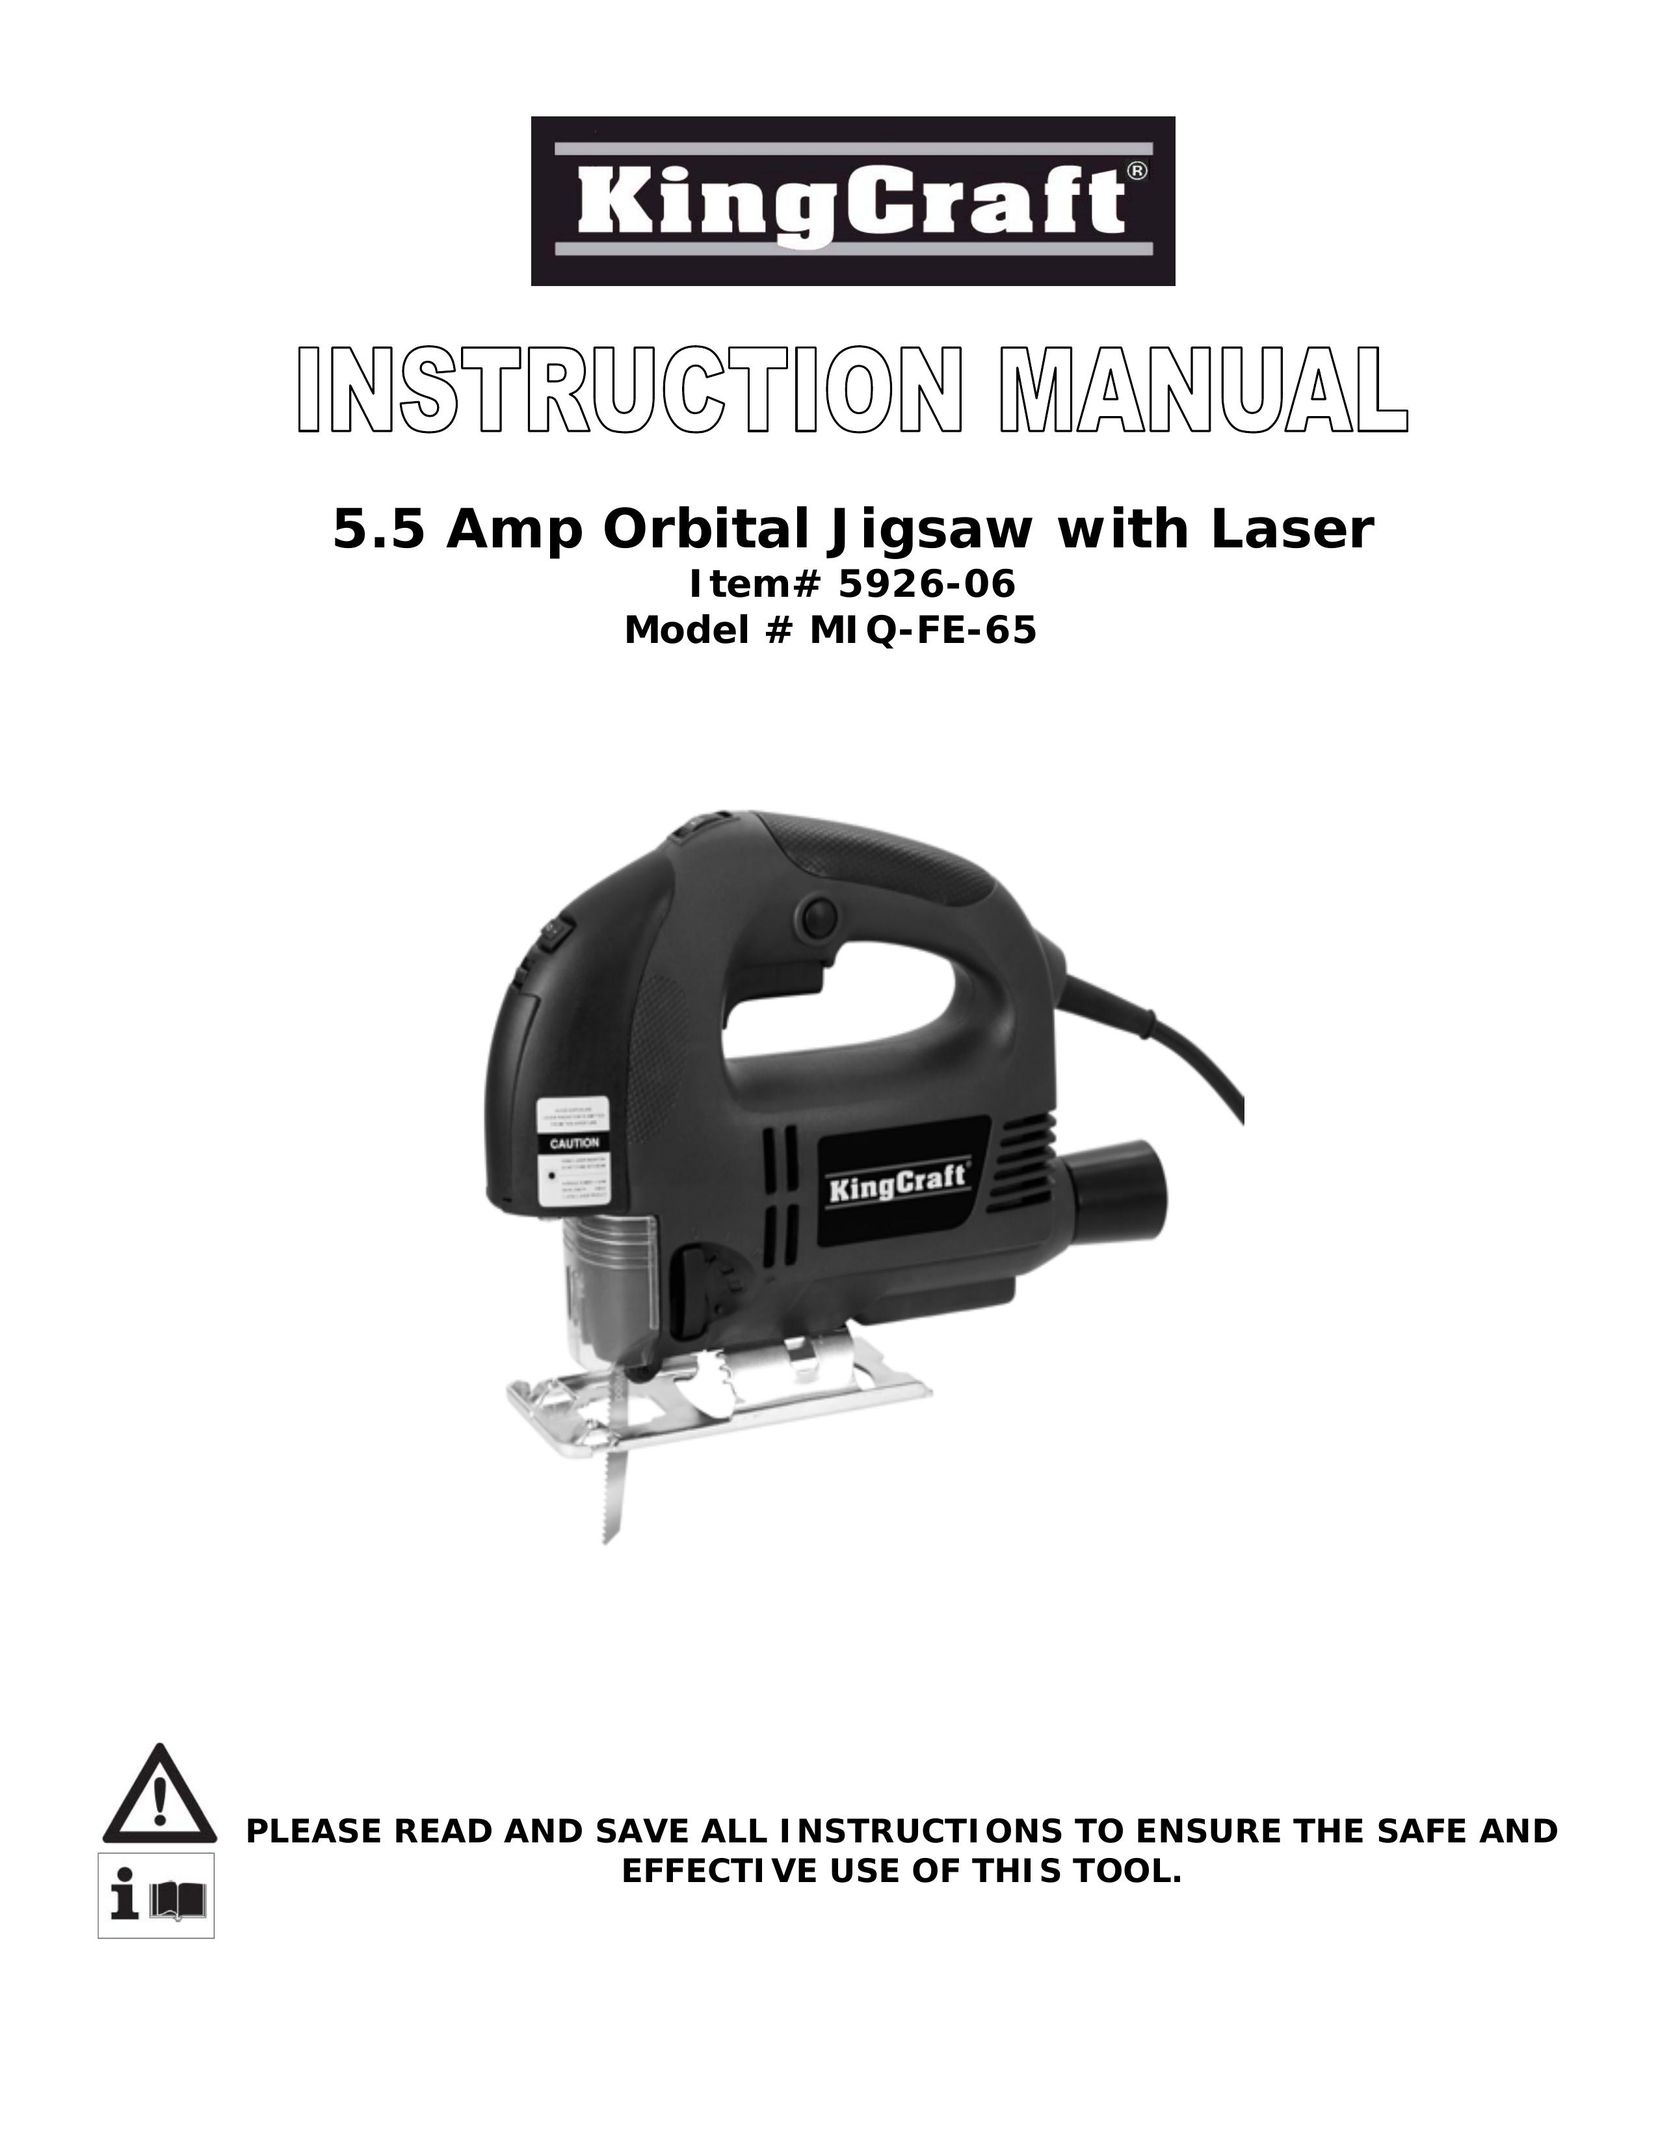 Wachsmuth & Krogmann MIQ-FE-65 Saw User Manual